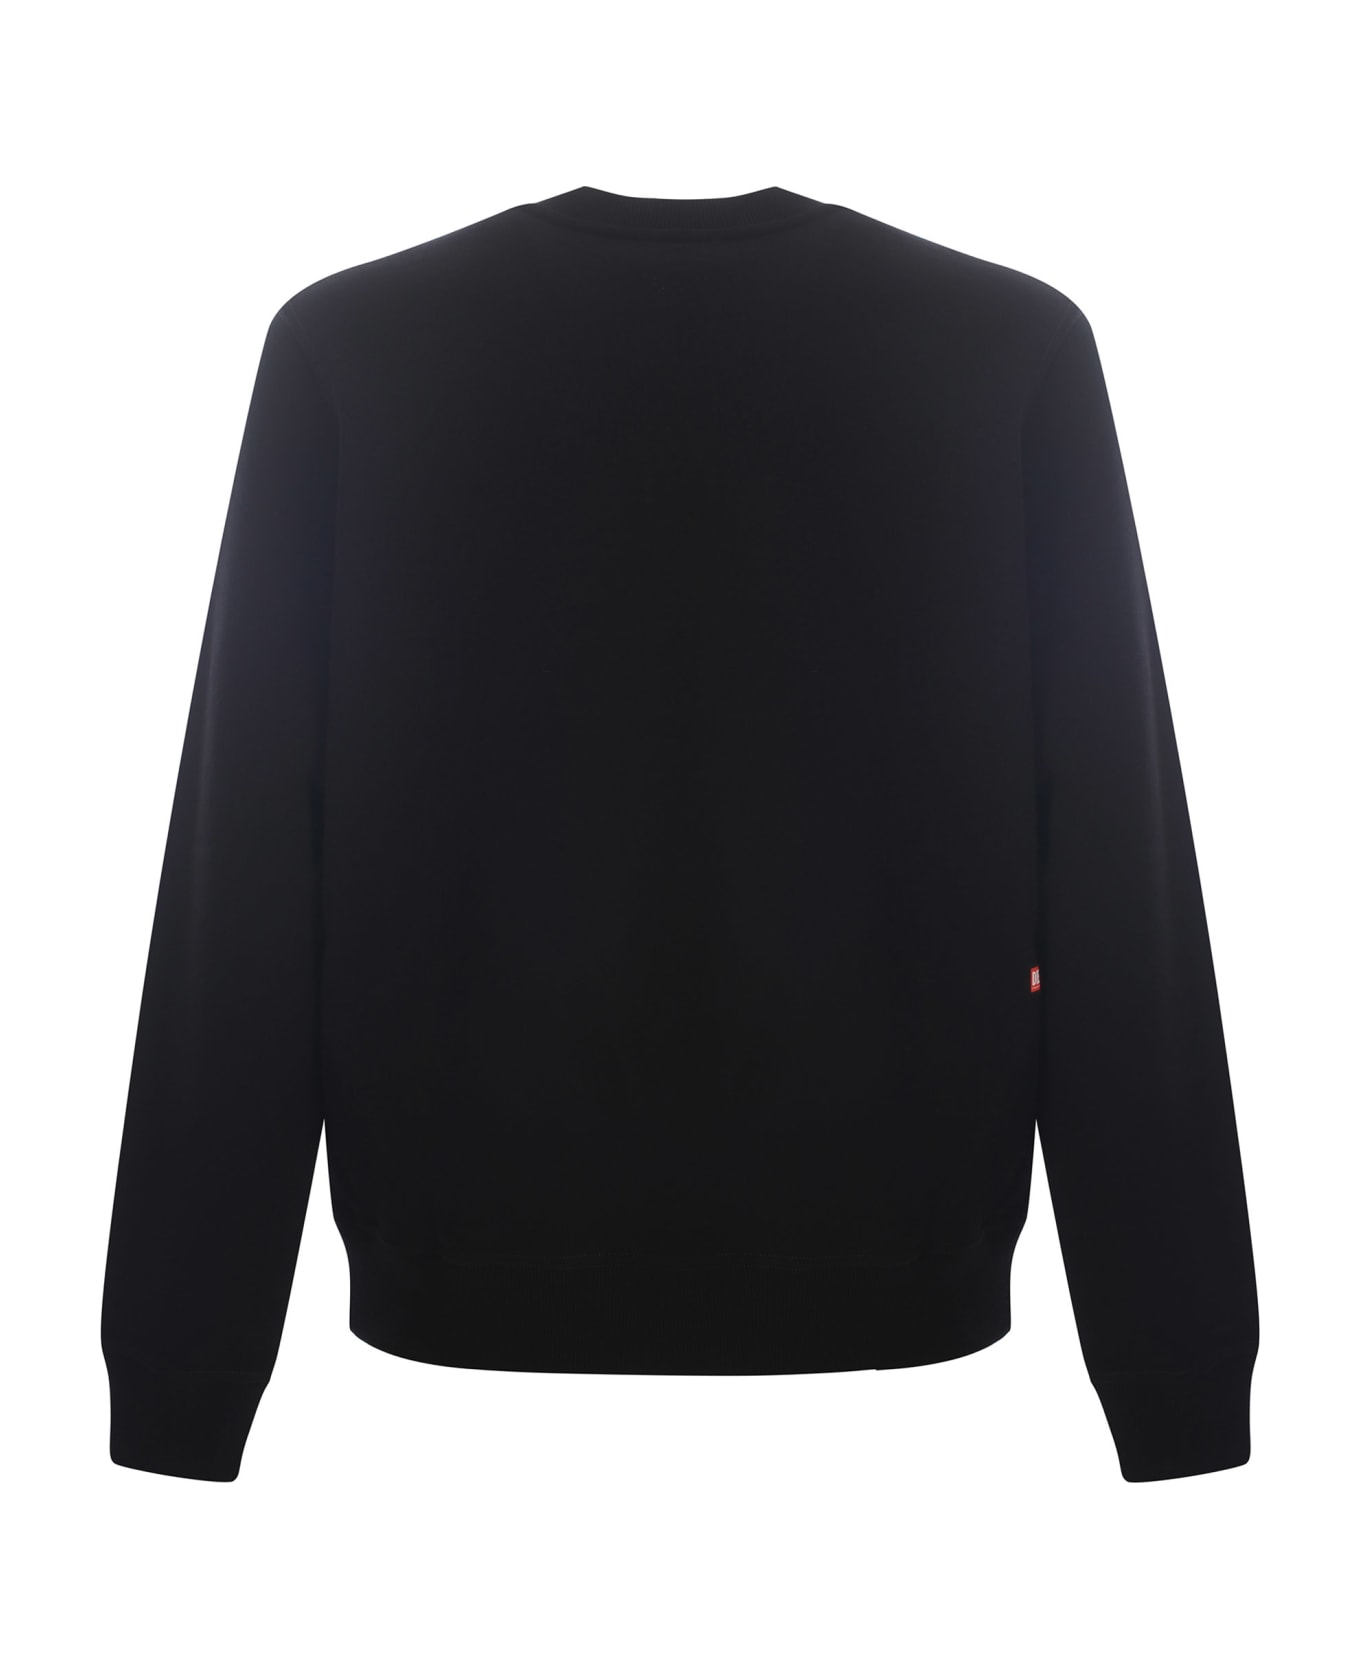 Diesel S-ginn N1 Sweatshirt - Xx Black